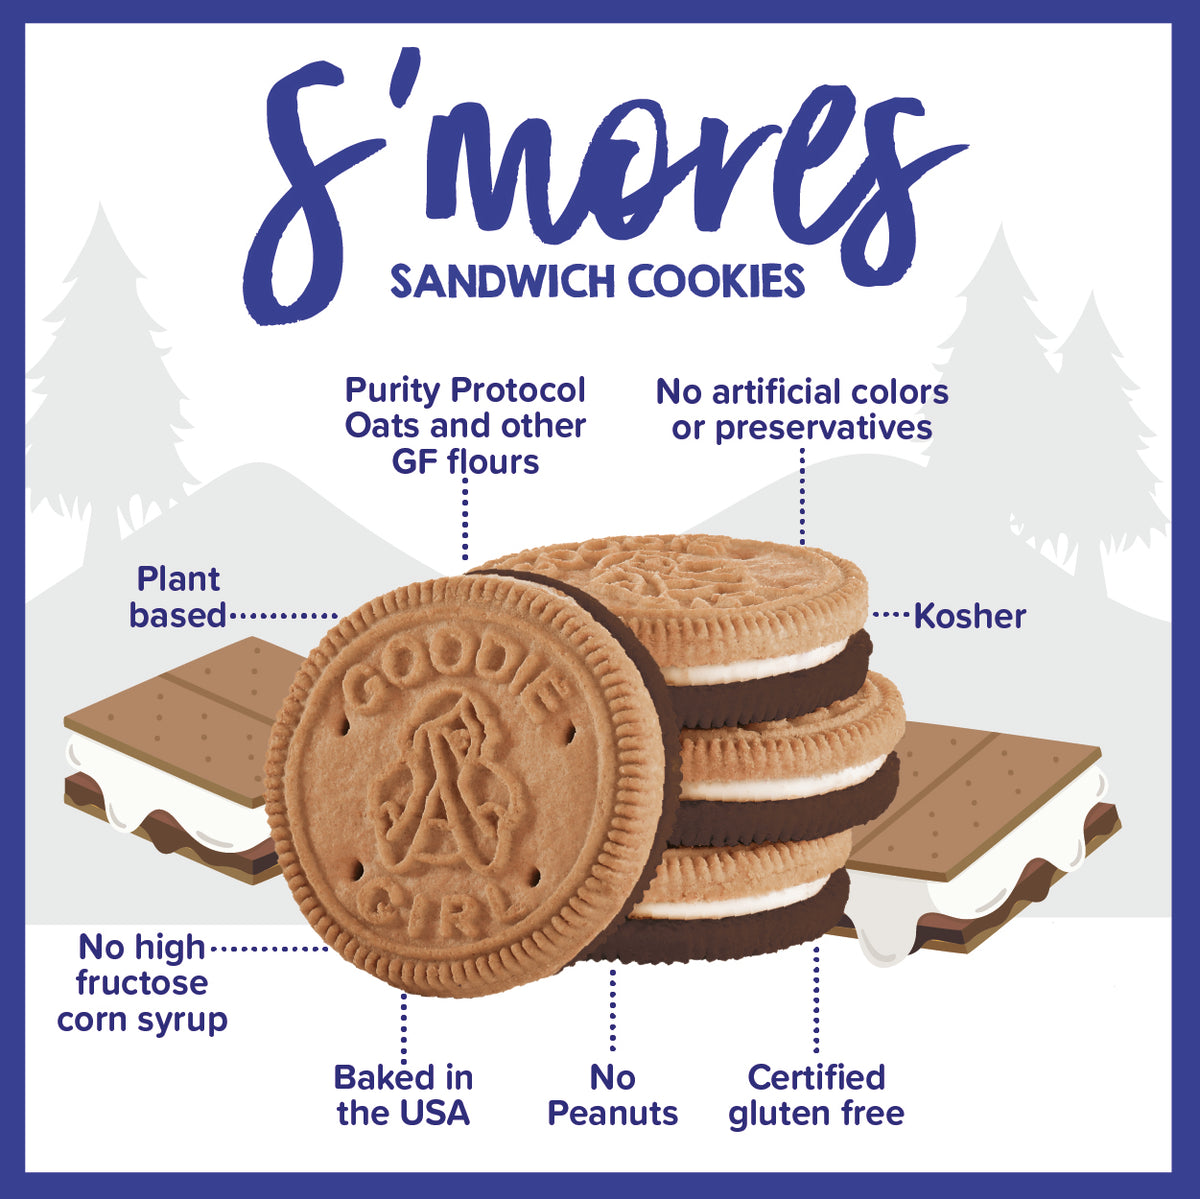 S’mores Sandwich Cookies